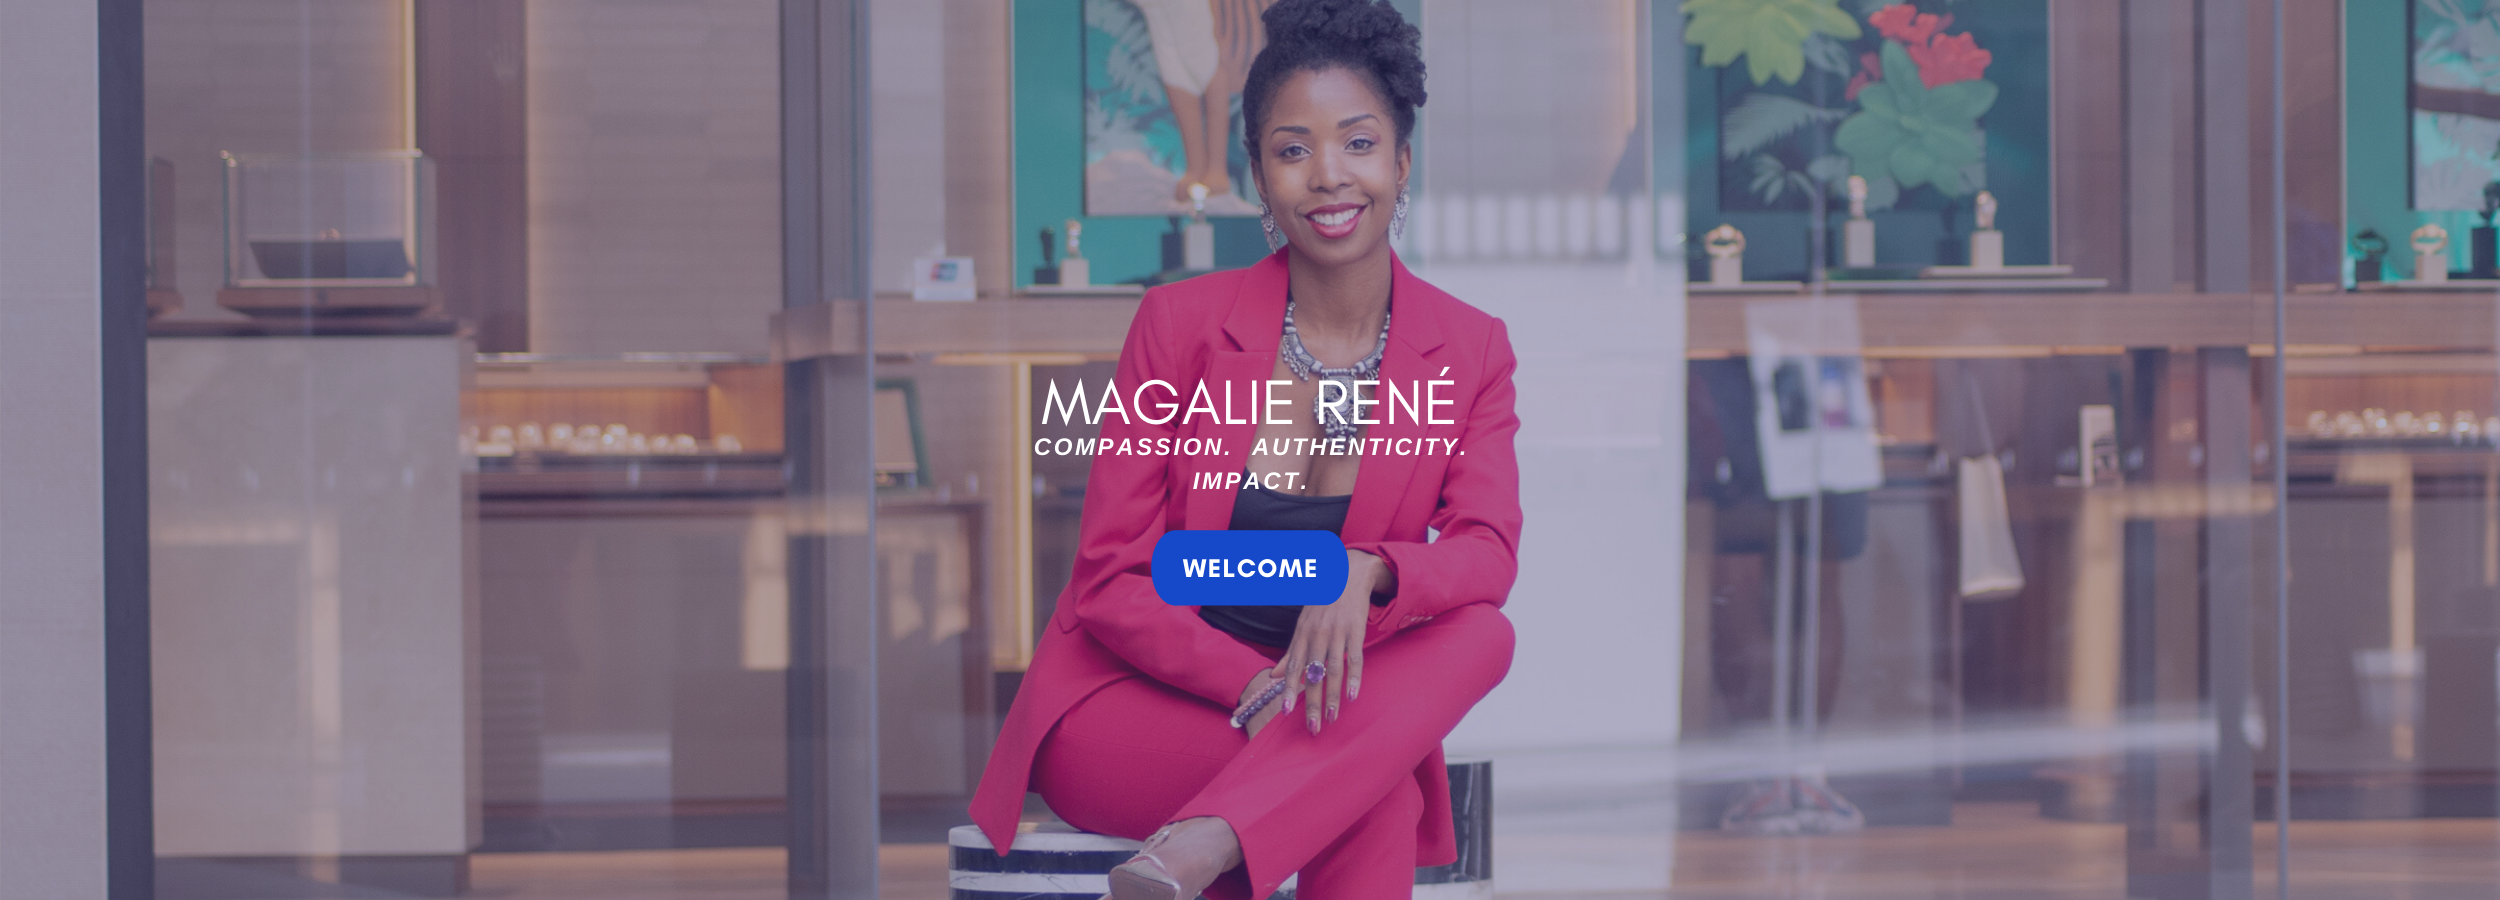 Magalie Rene Business Strategist Coach Facilitator Author